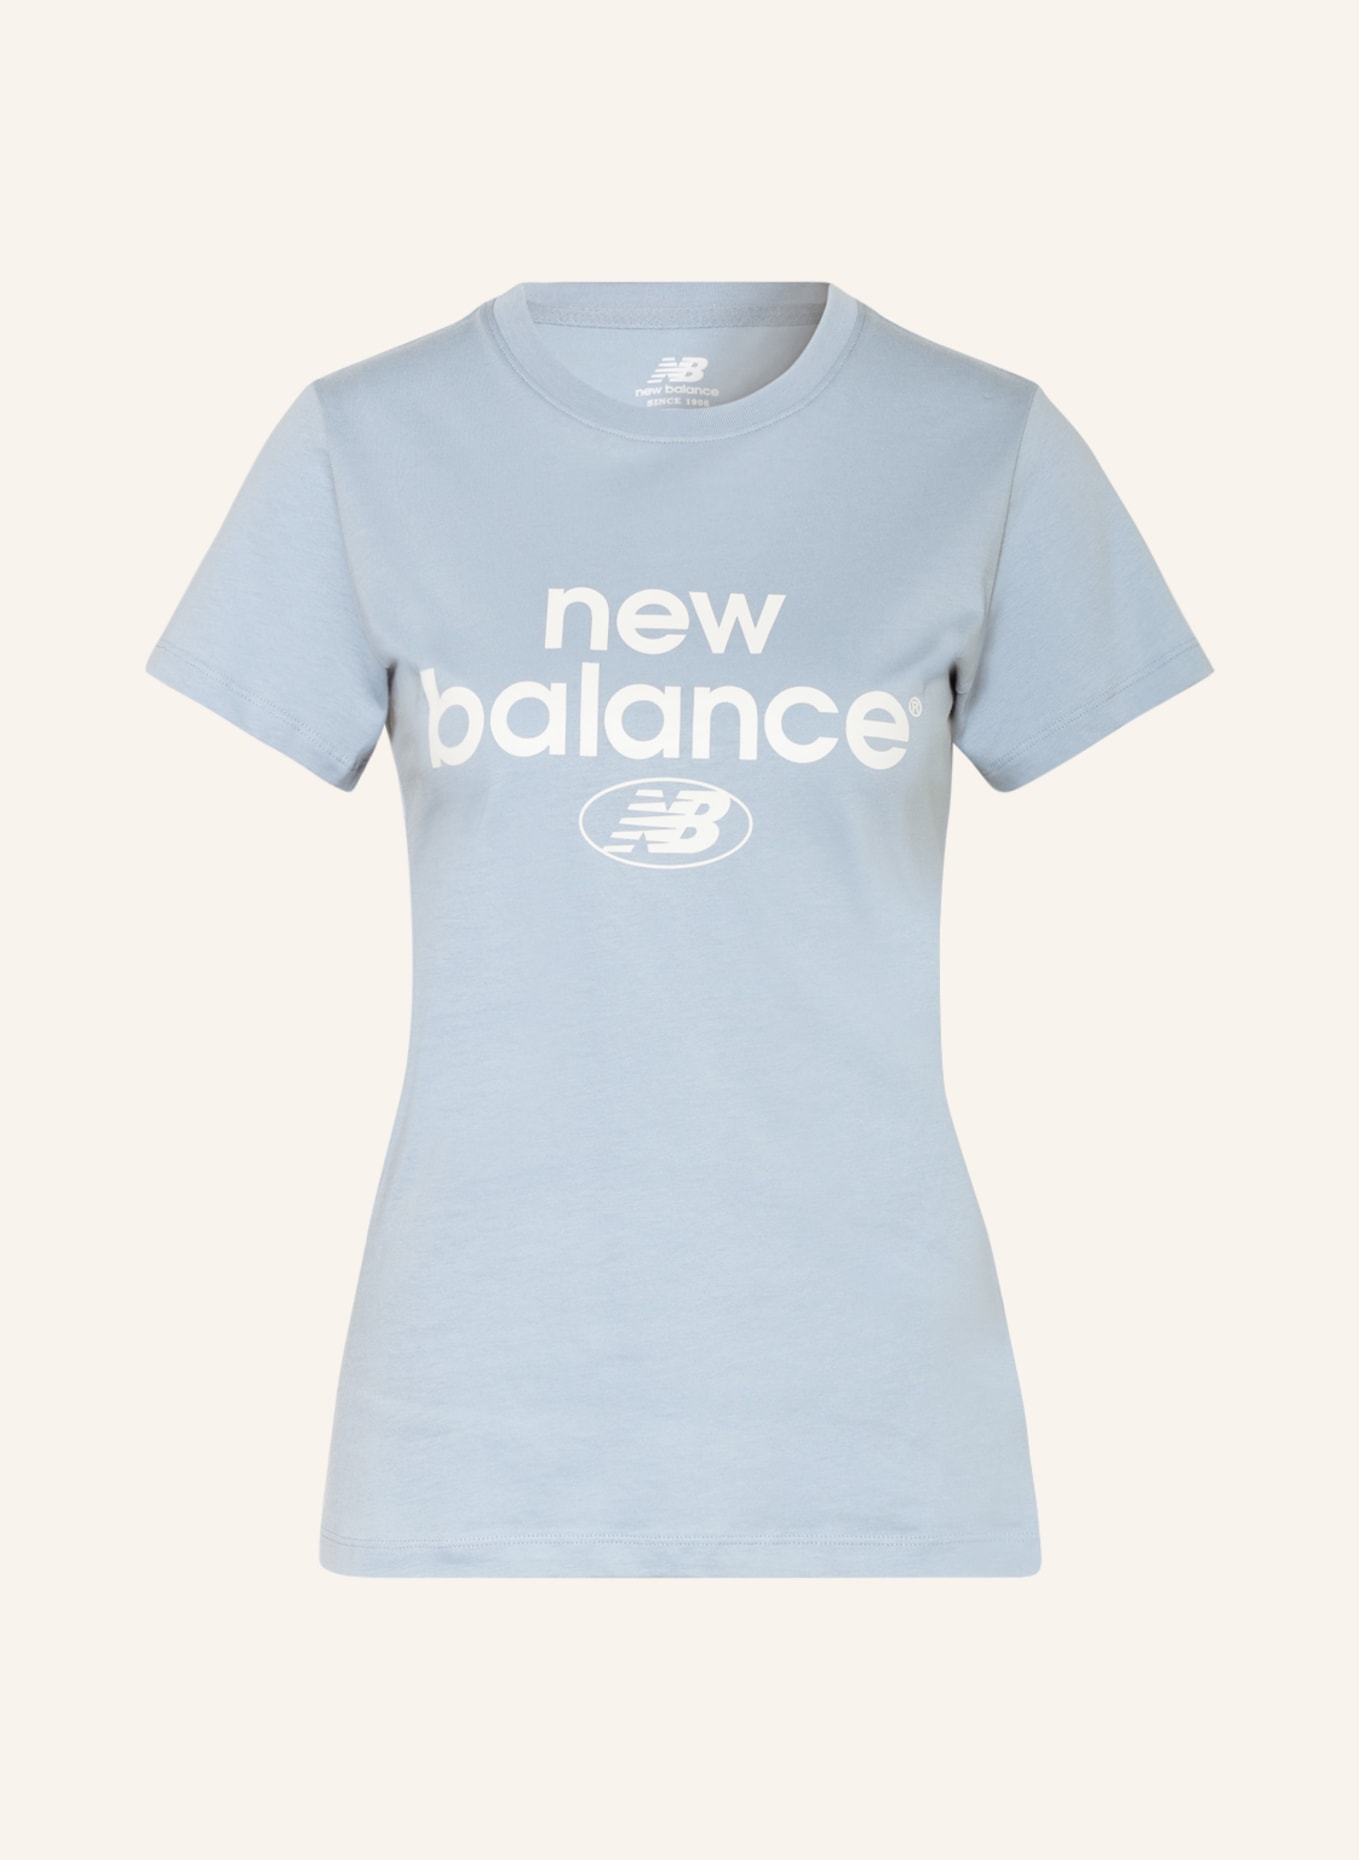 T-shirt blue/ in new ESSENTIALS white light balance